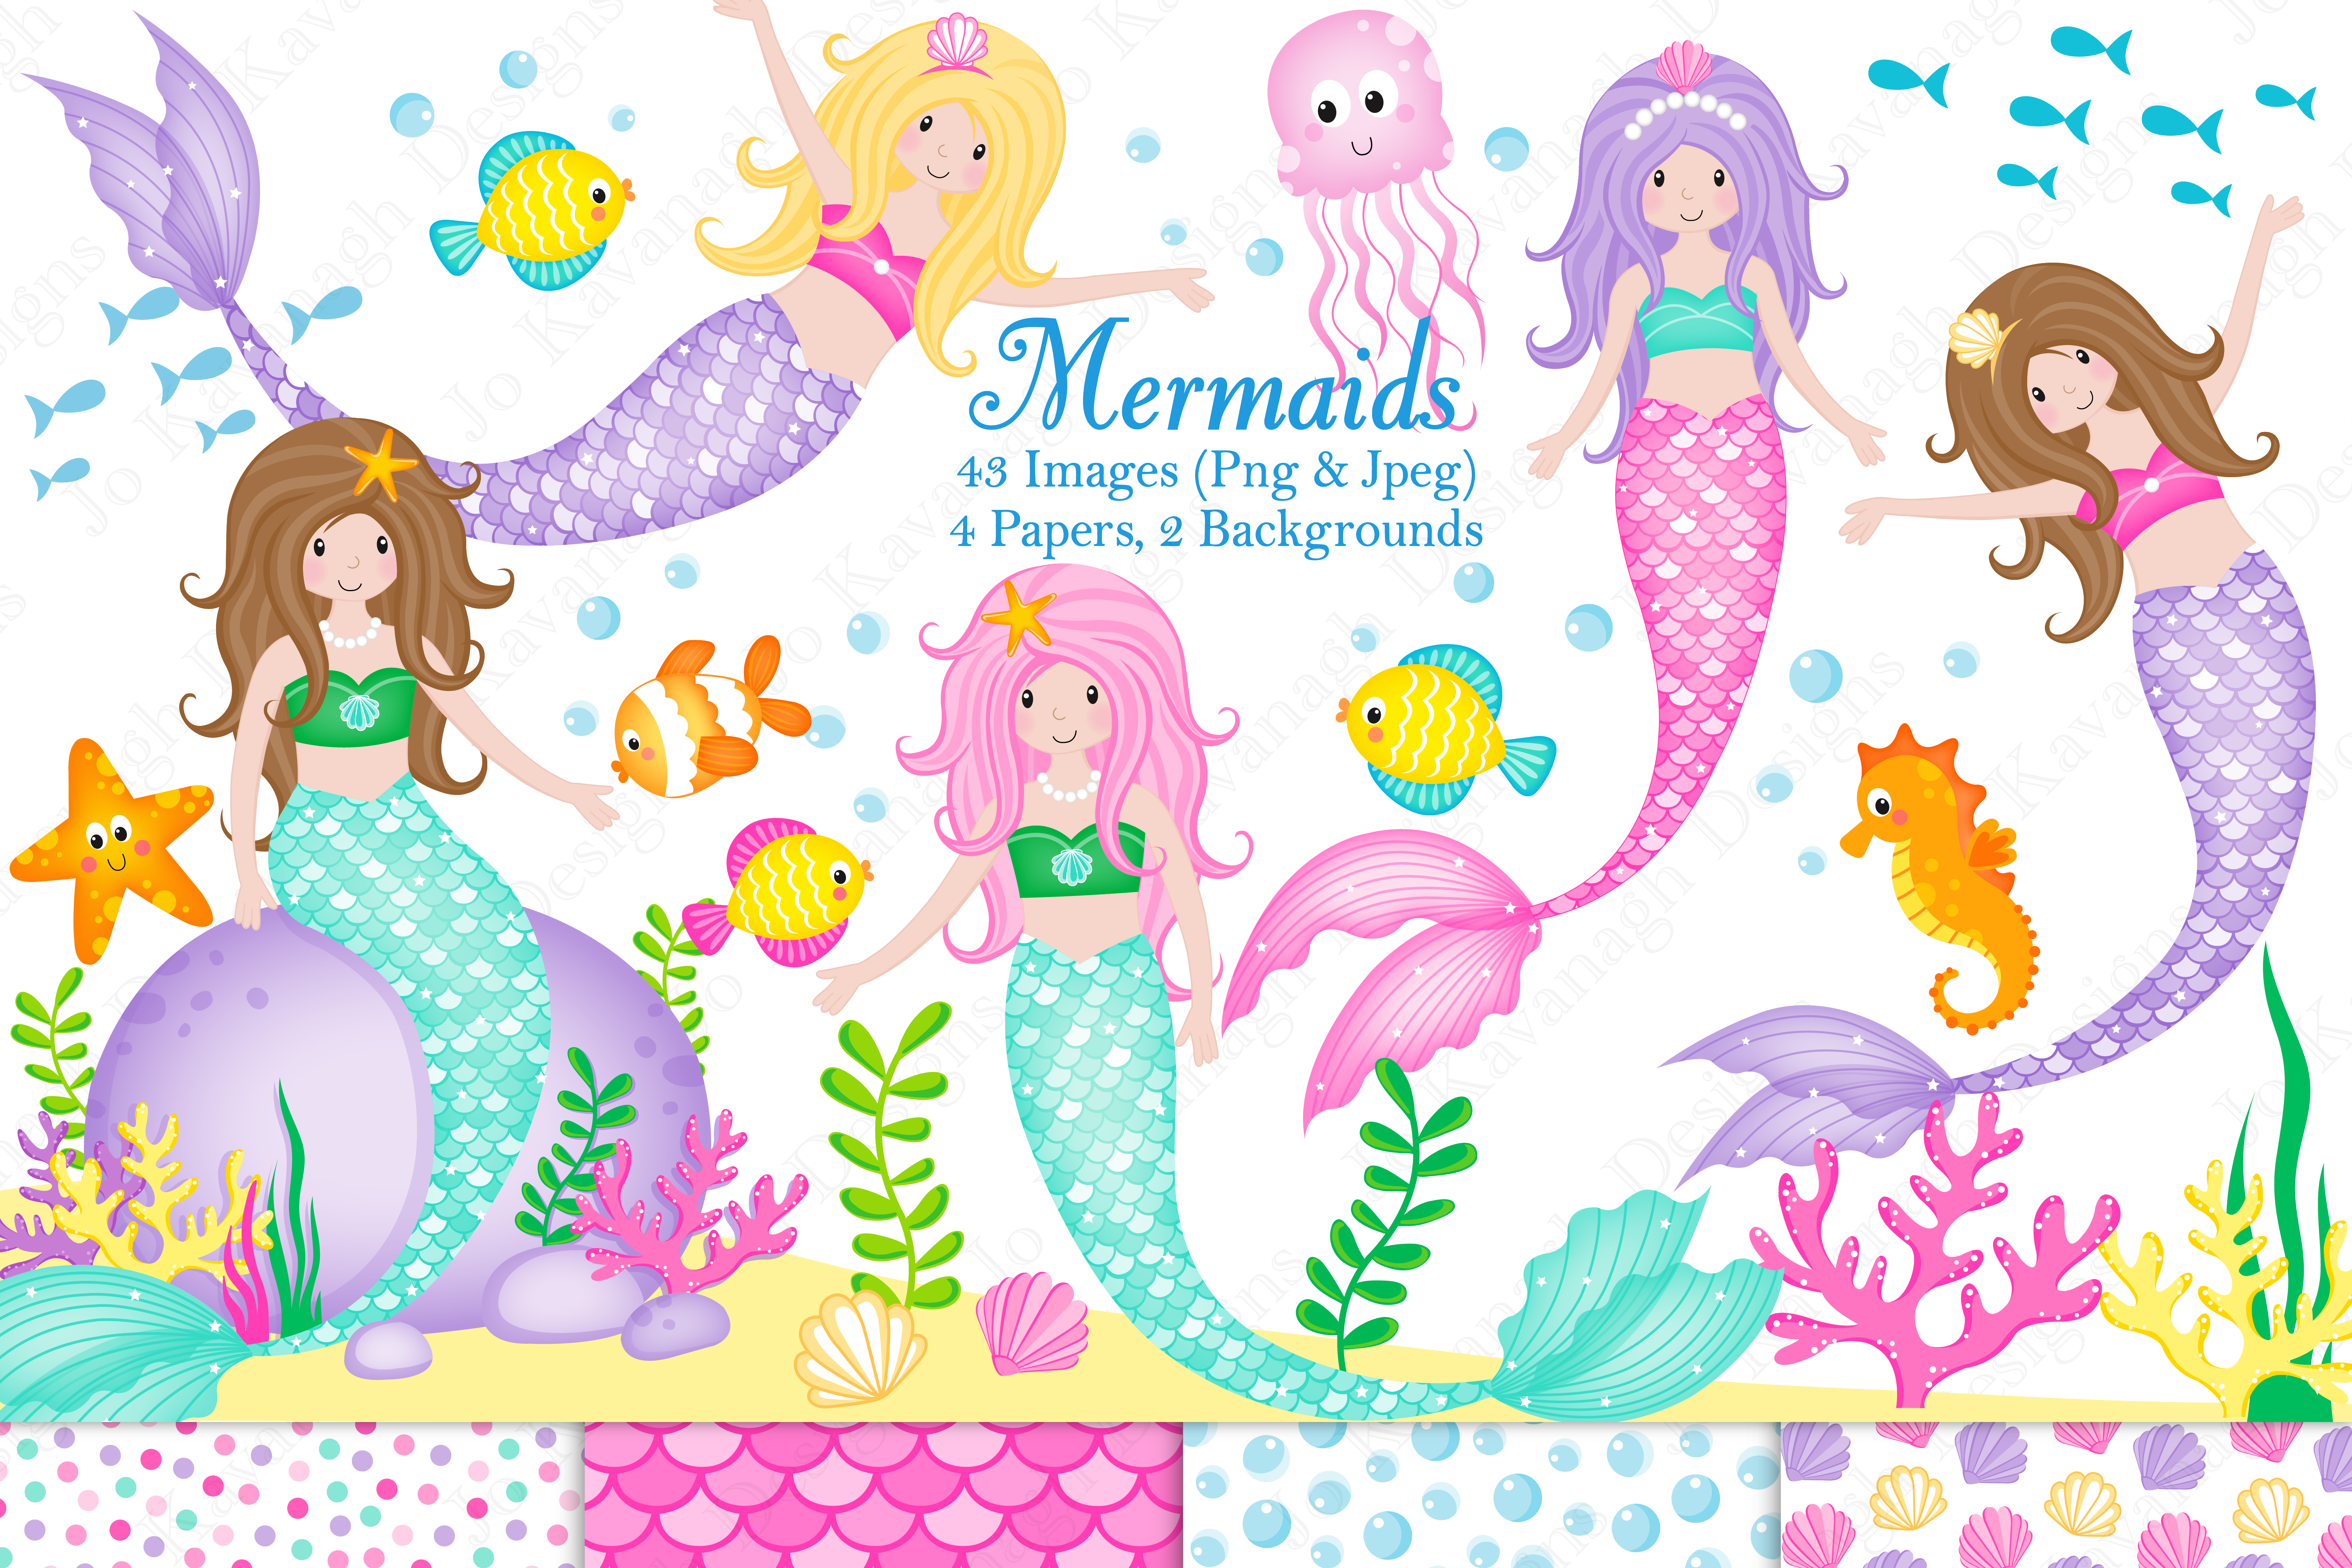 Mermaids, Mermaid graphics & Illustrati | Design Bundles